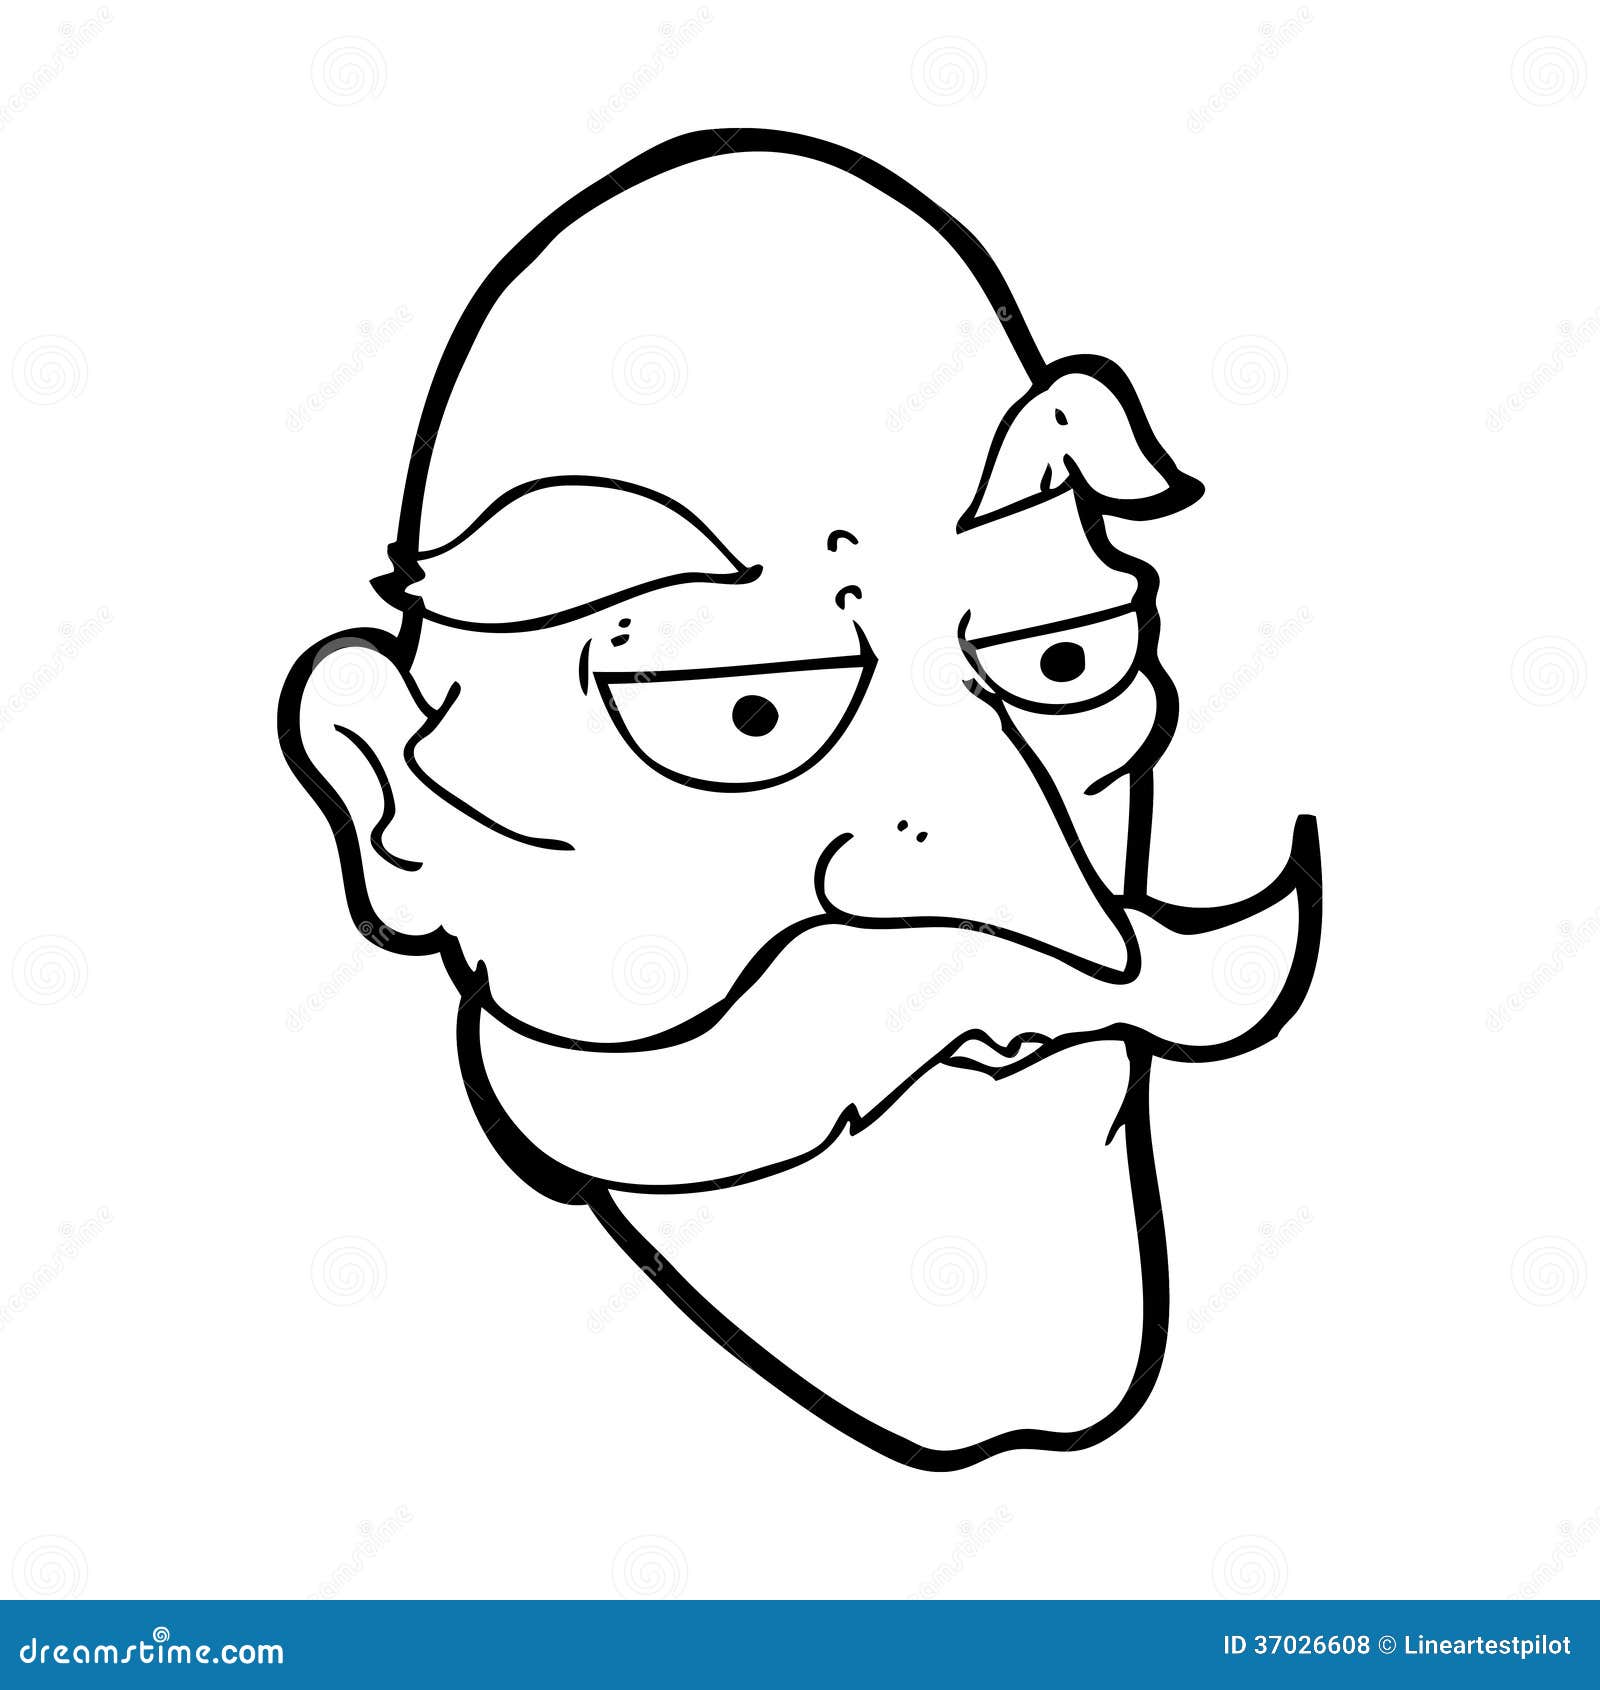 Cartoon old man face stock illustration. Illustration of quirky - 37026608